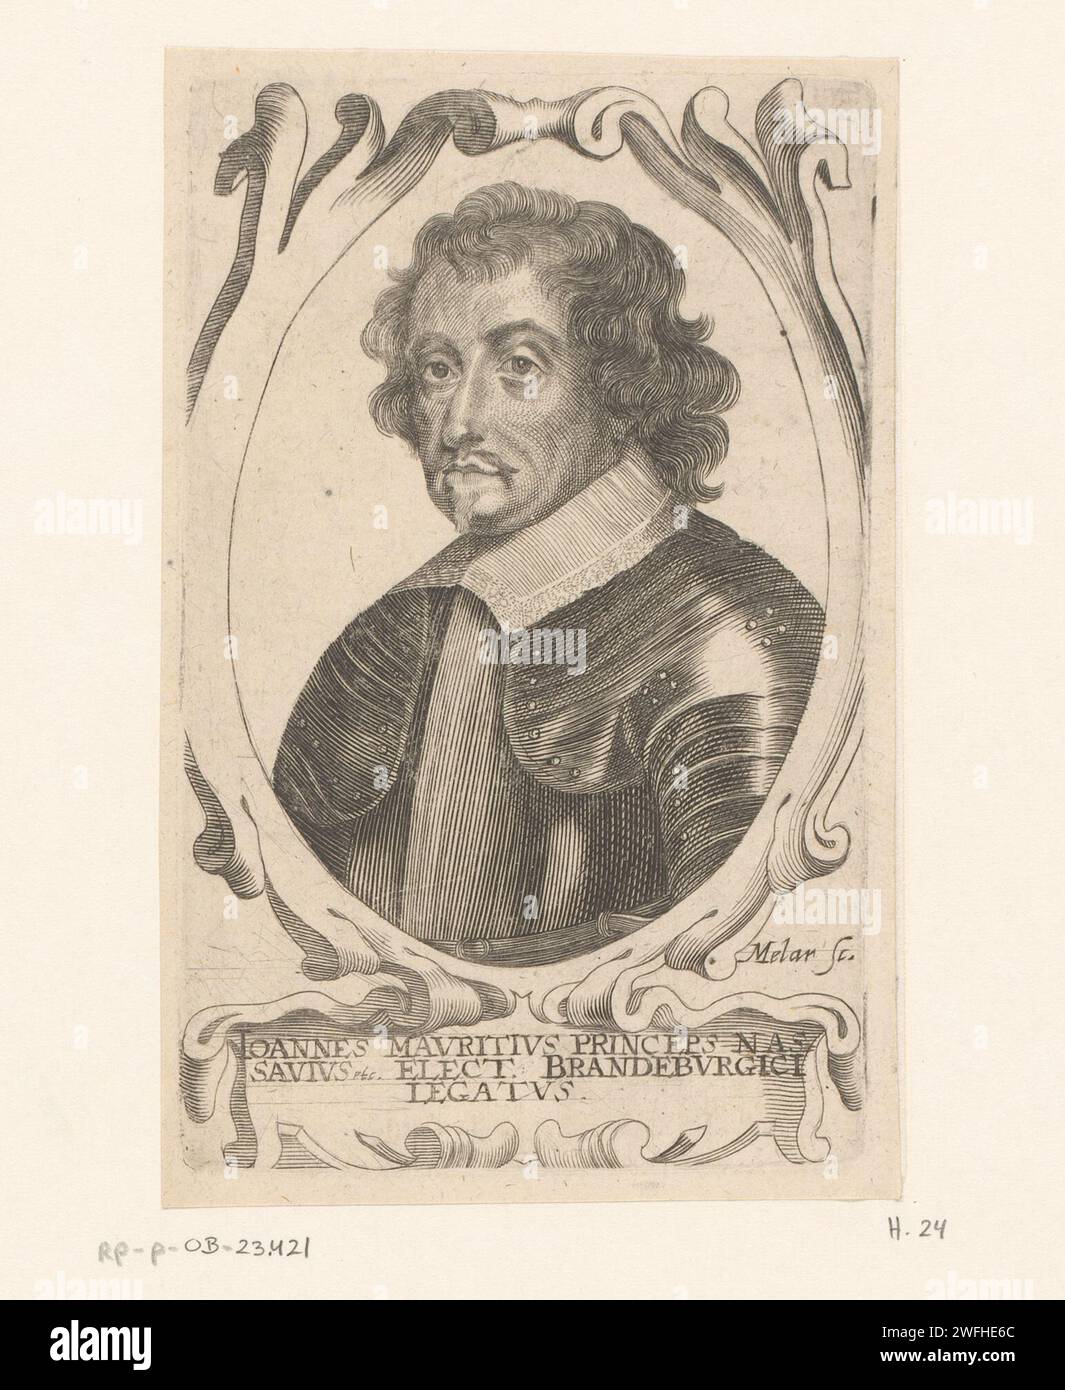 Portrait of Johan Maurits van Nassau -Siegen, Adriaen Millaert, 1643 - 1667 print  Antwerp paper engraving historical persons. colonial governor Stock Photo